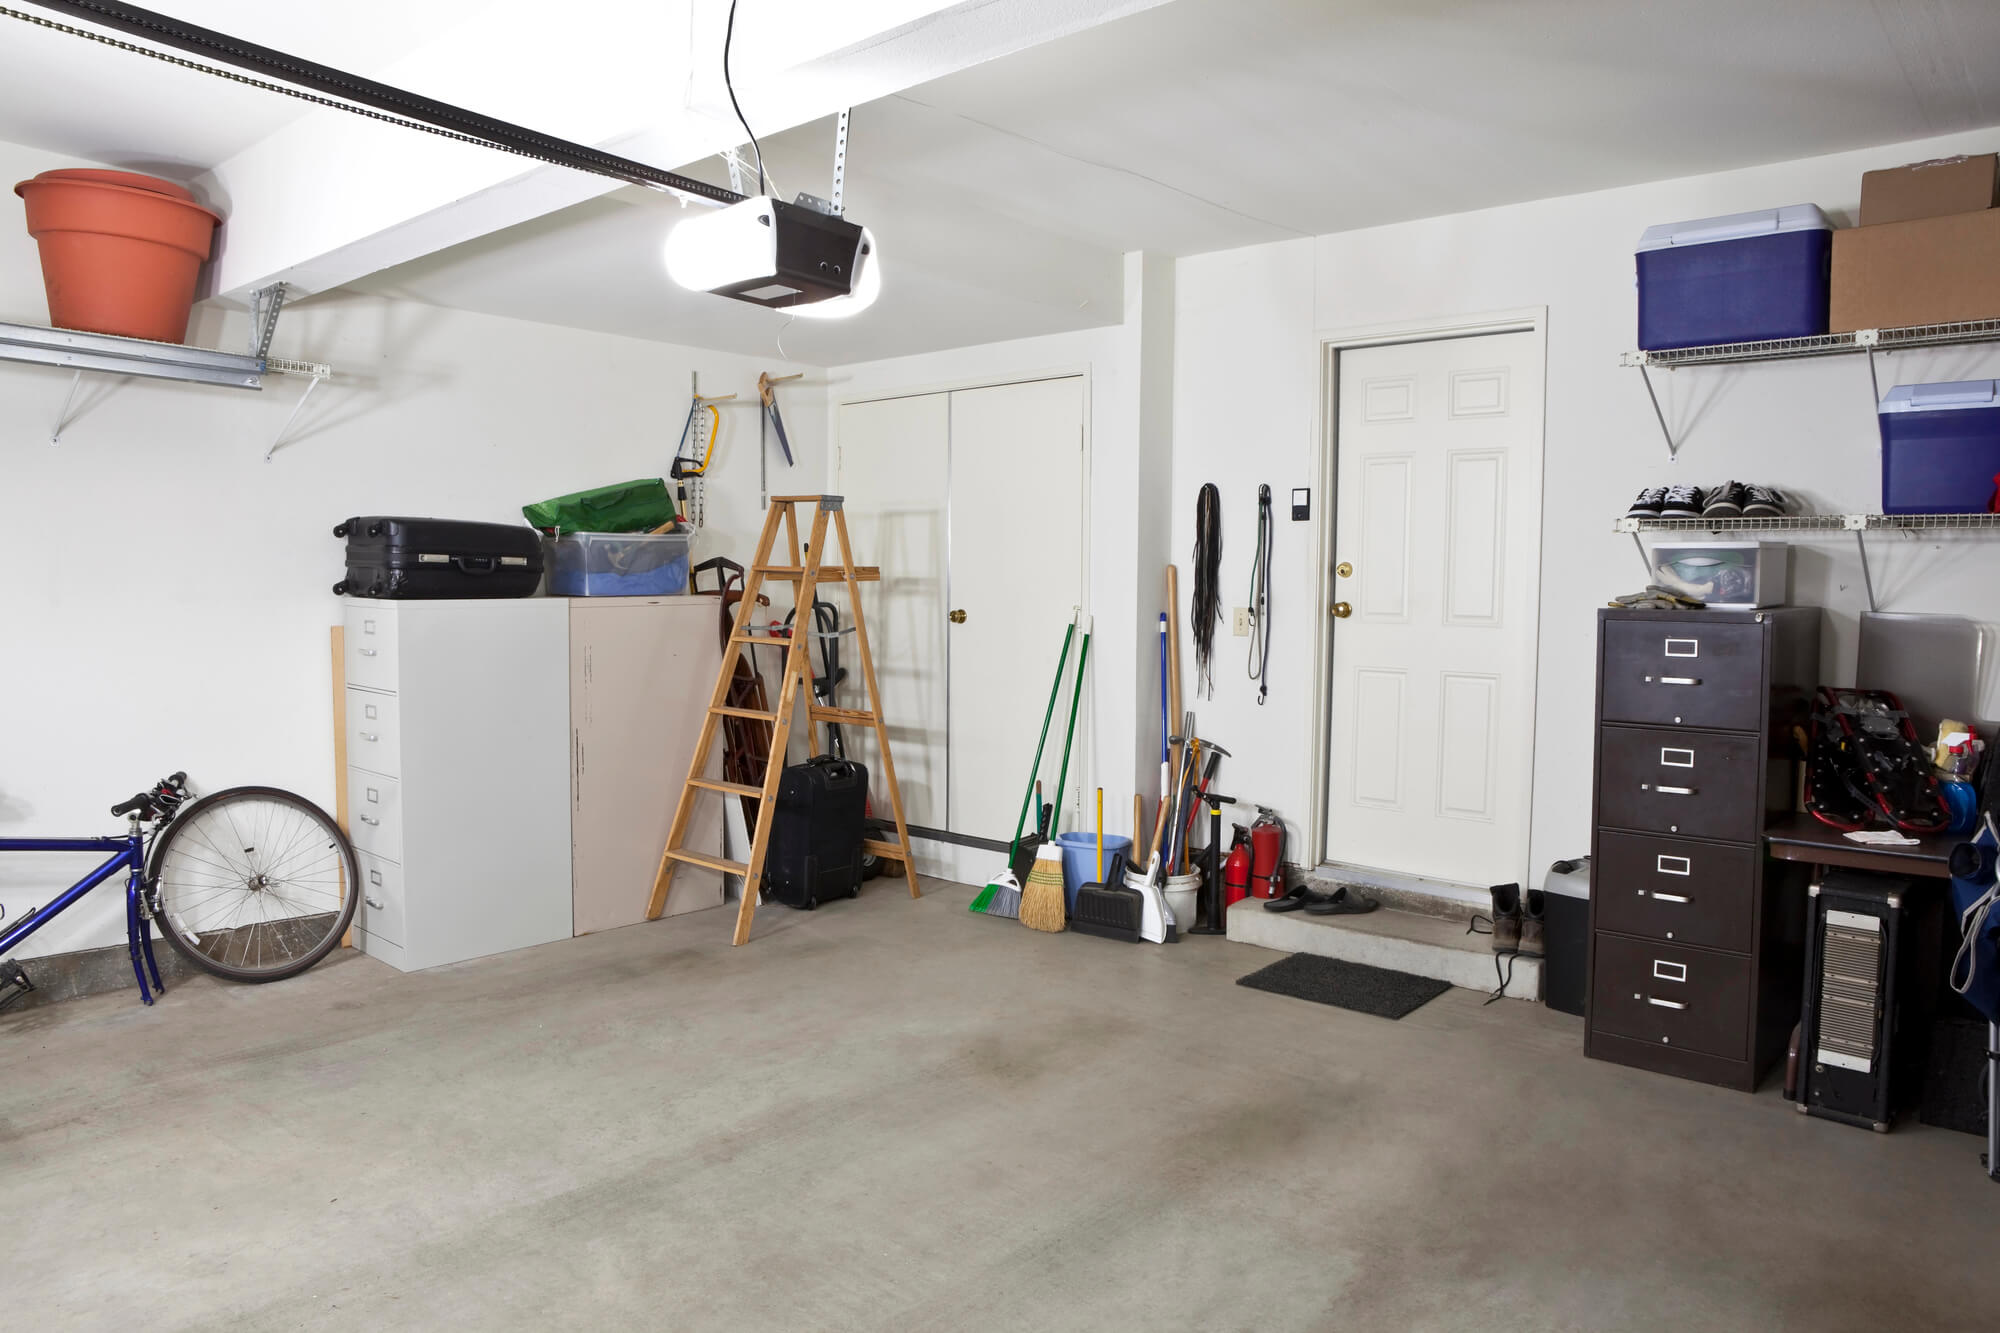 Interior view of garage with garage door opener and storage gear in background